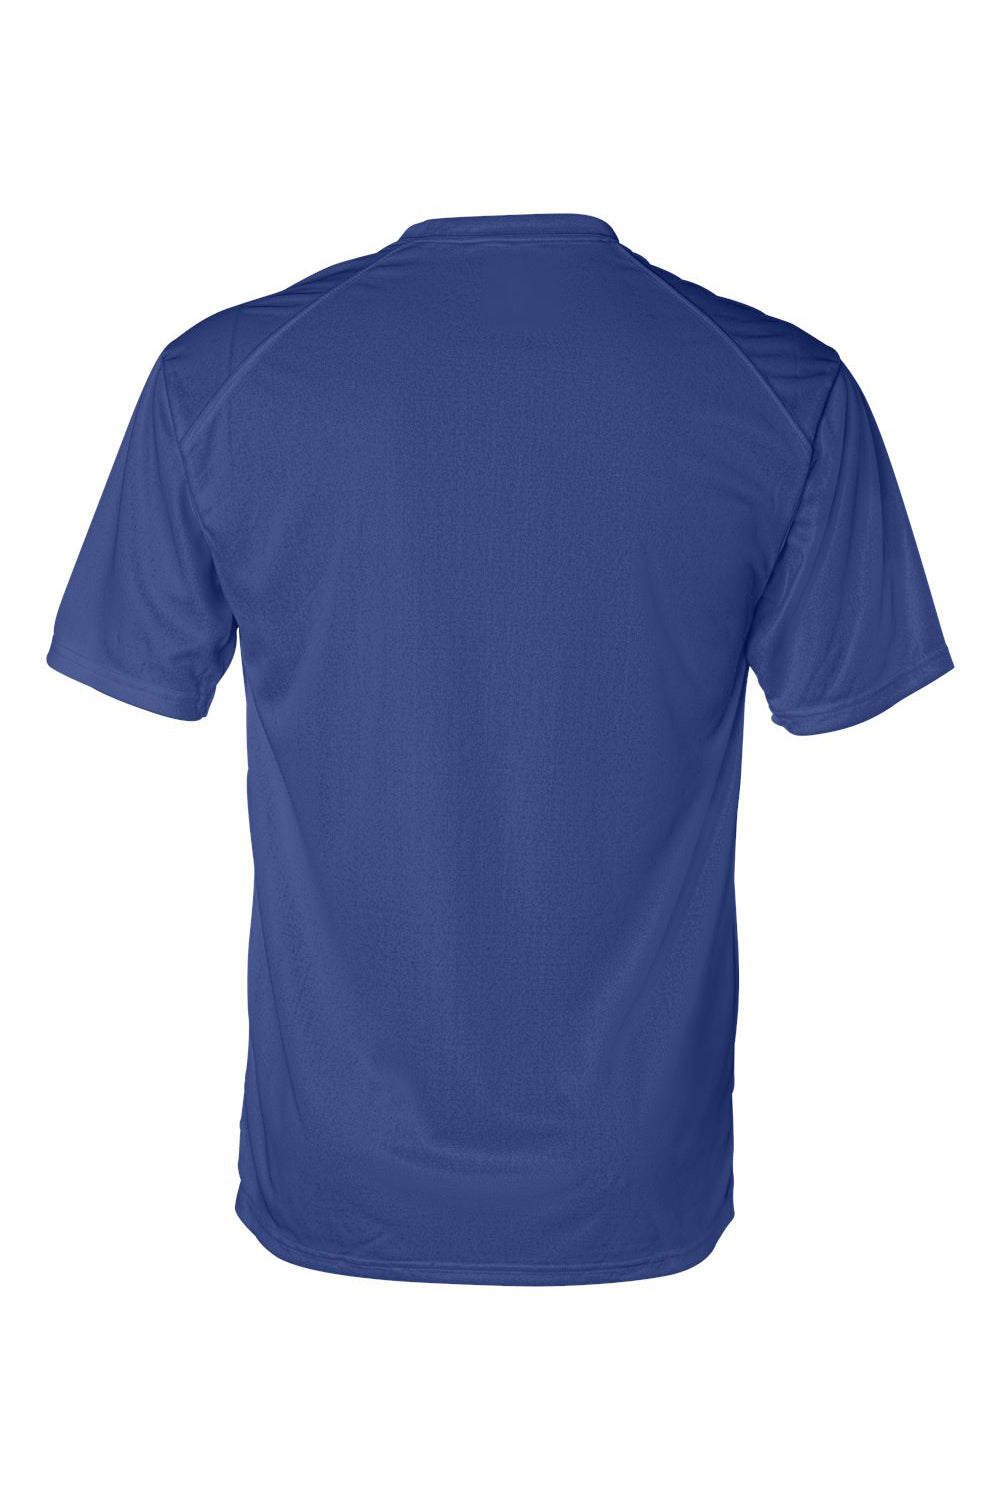 Badger 4120 Mens B-Core Moisture Wicking Short Sleeve Crewneck T-Shirt Royal Blue Flat Back